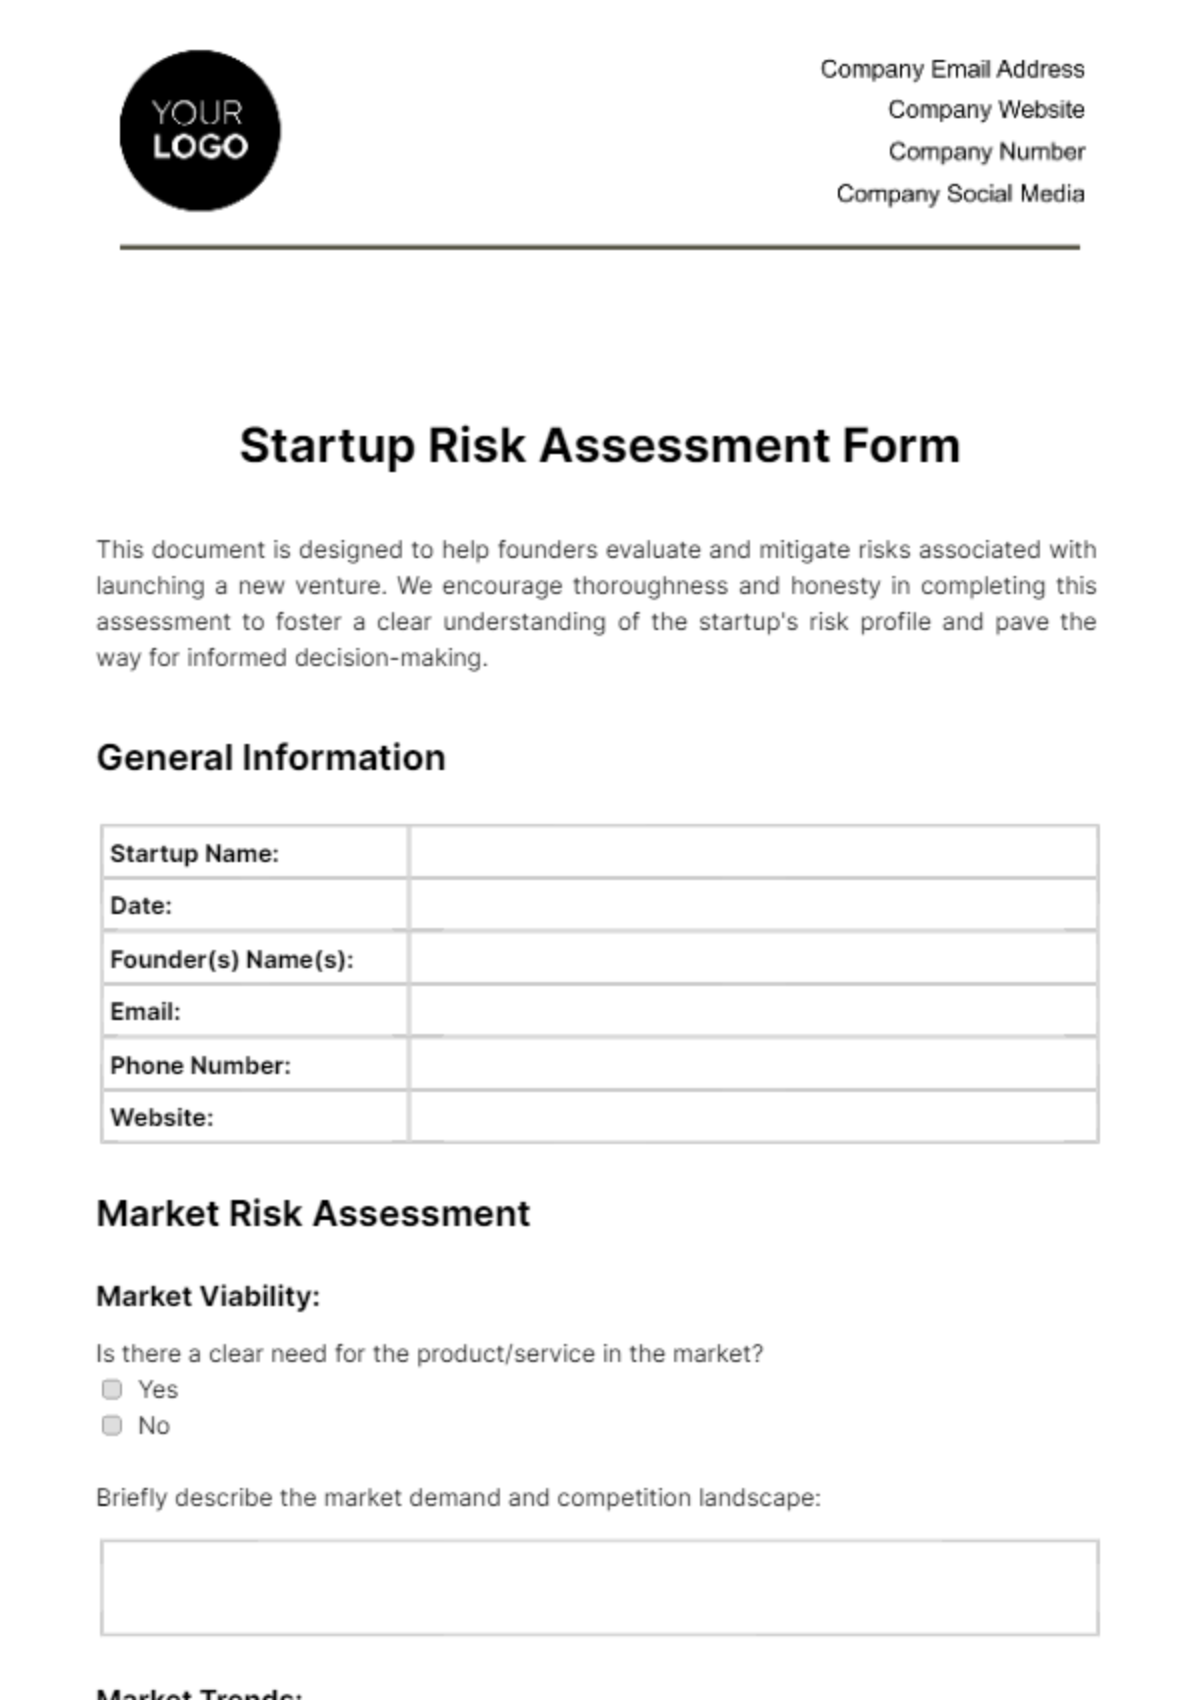 Startup Risk Assessment Form Template